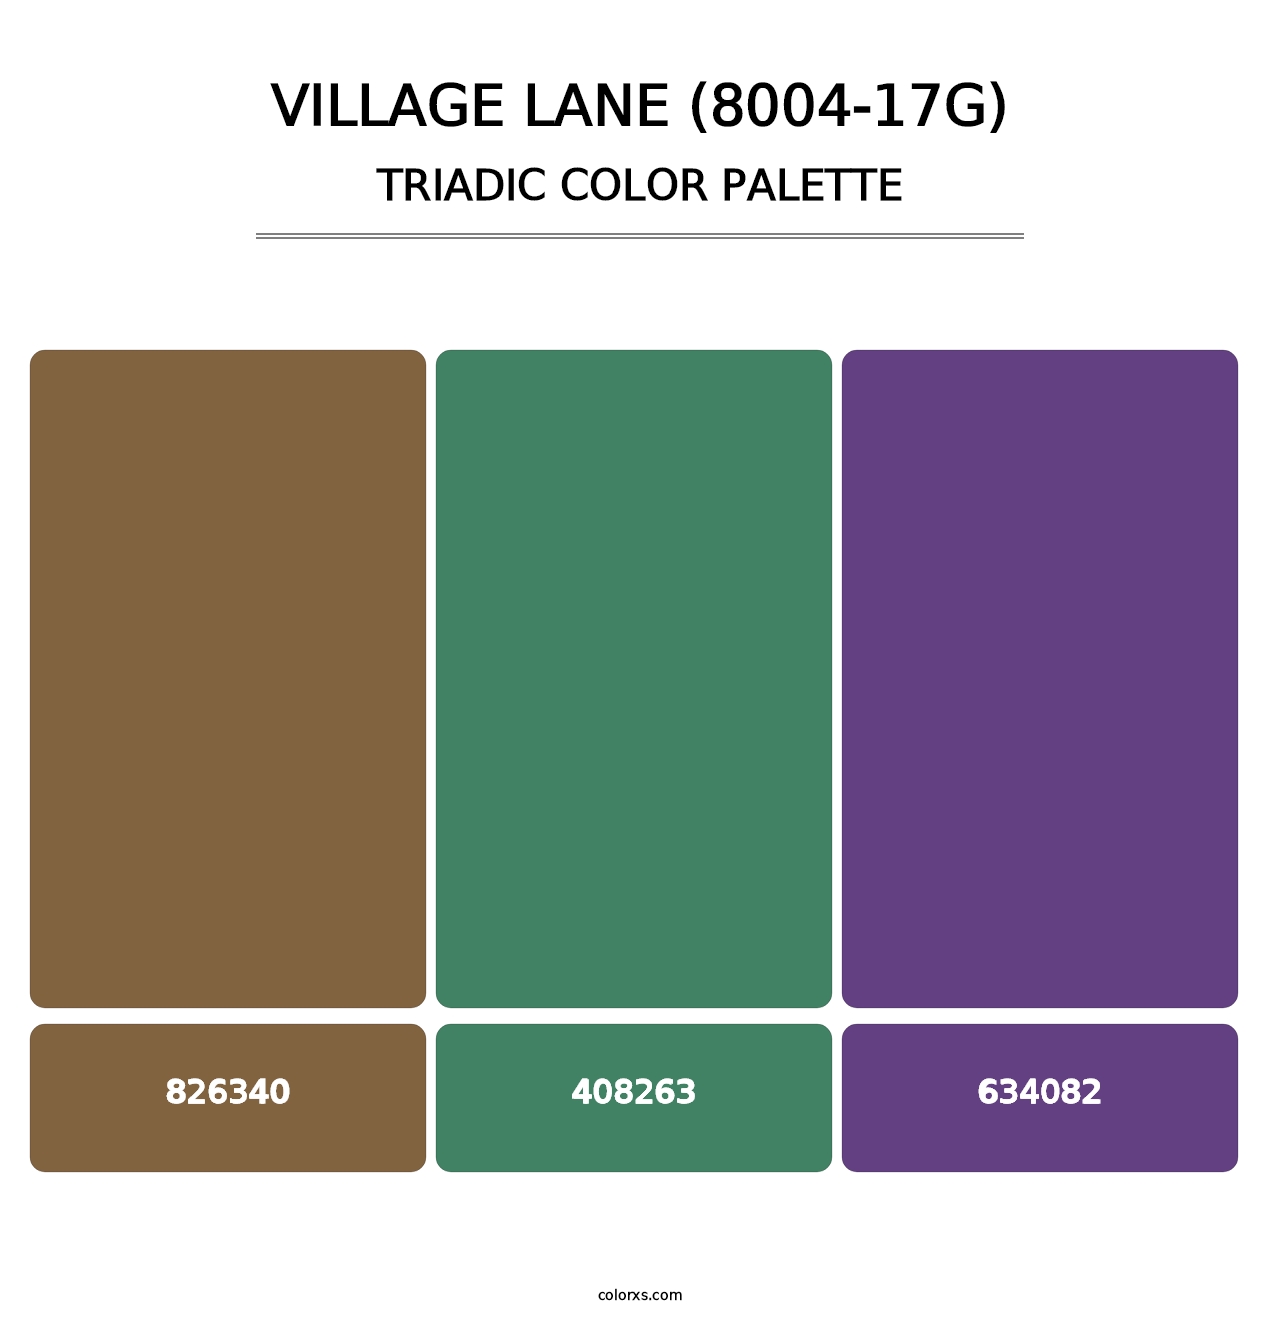 Village Lane (8004-17G) - Triadic Color Palette